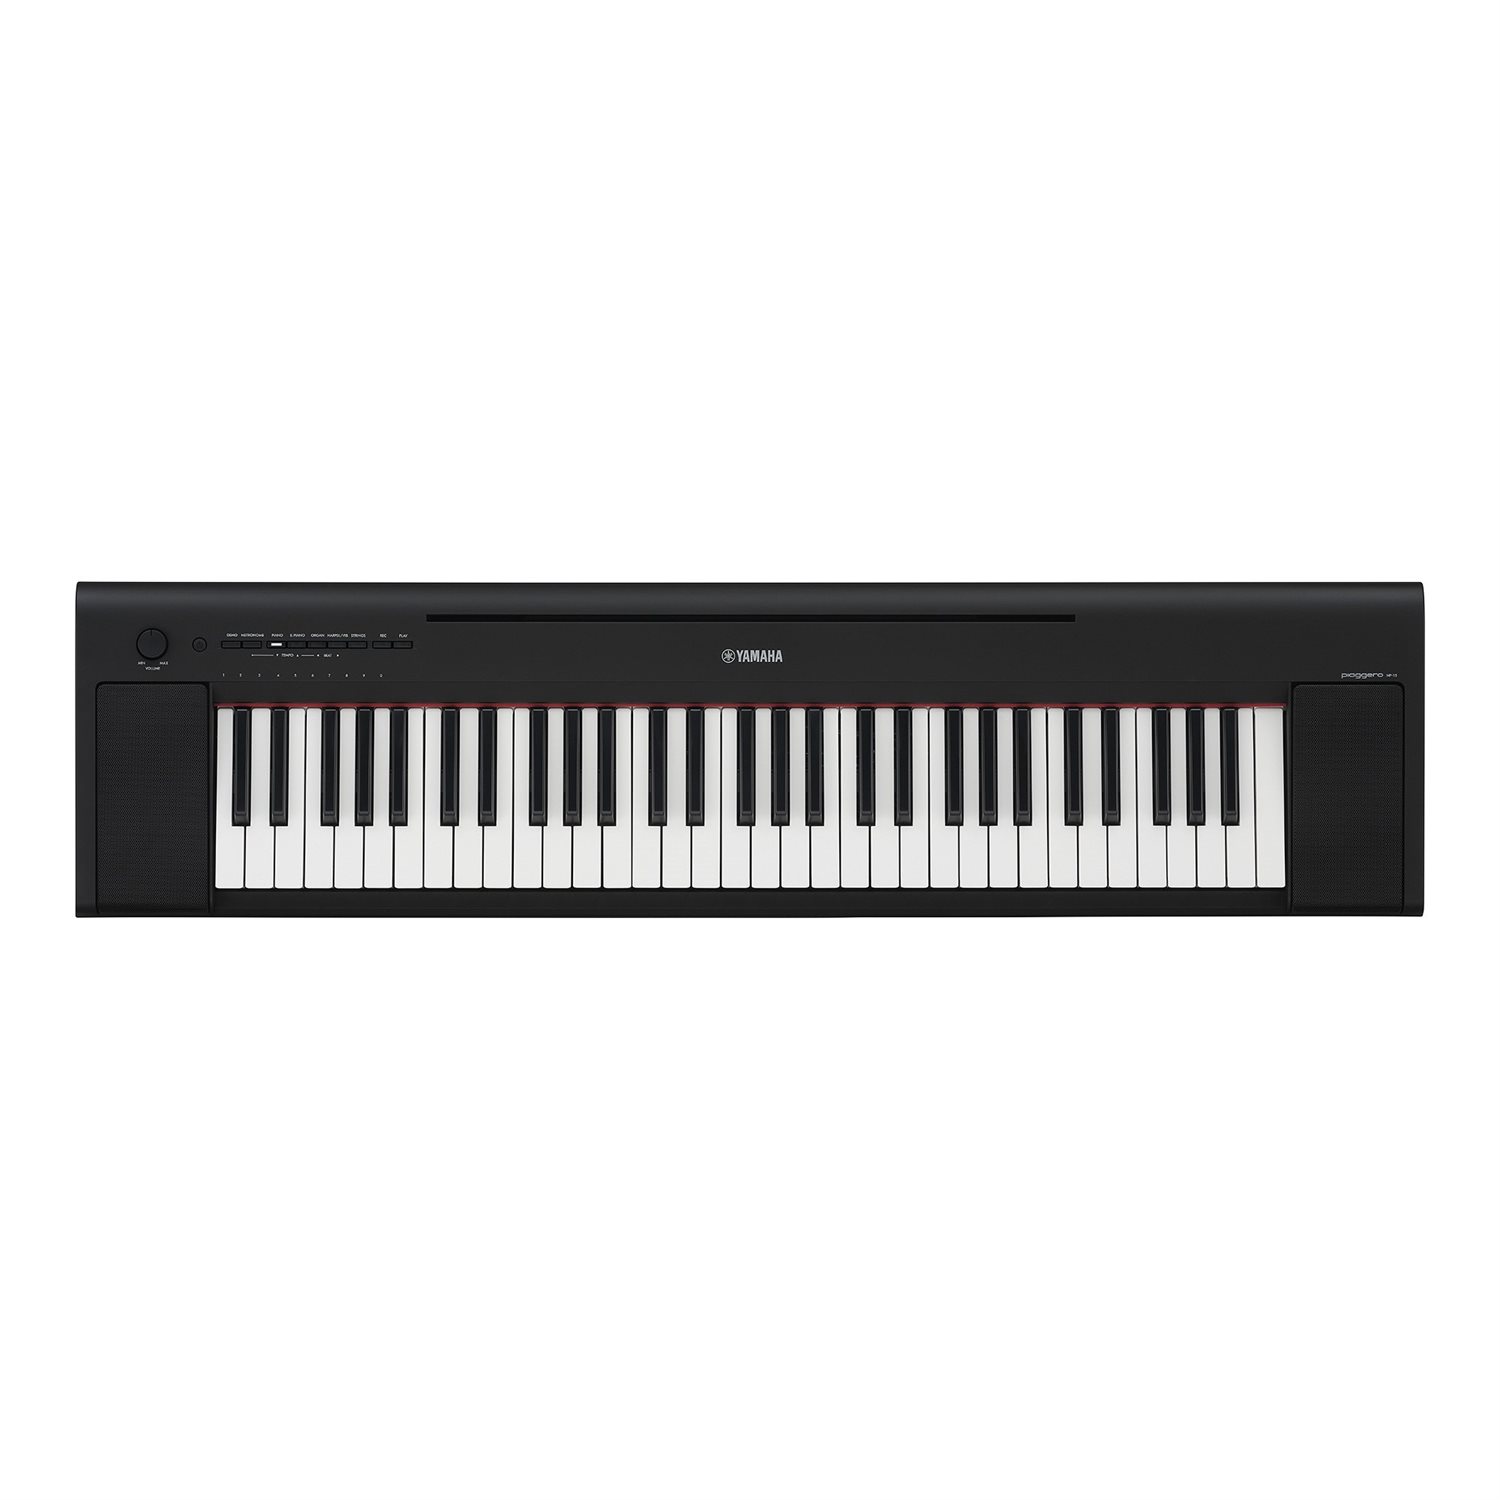 YAMAHA - Piaggero NP-15 - 61-key Portable Piano - Black